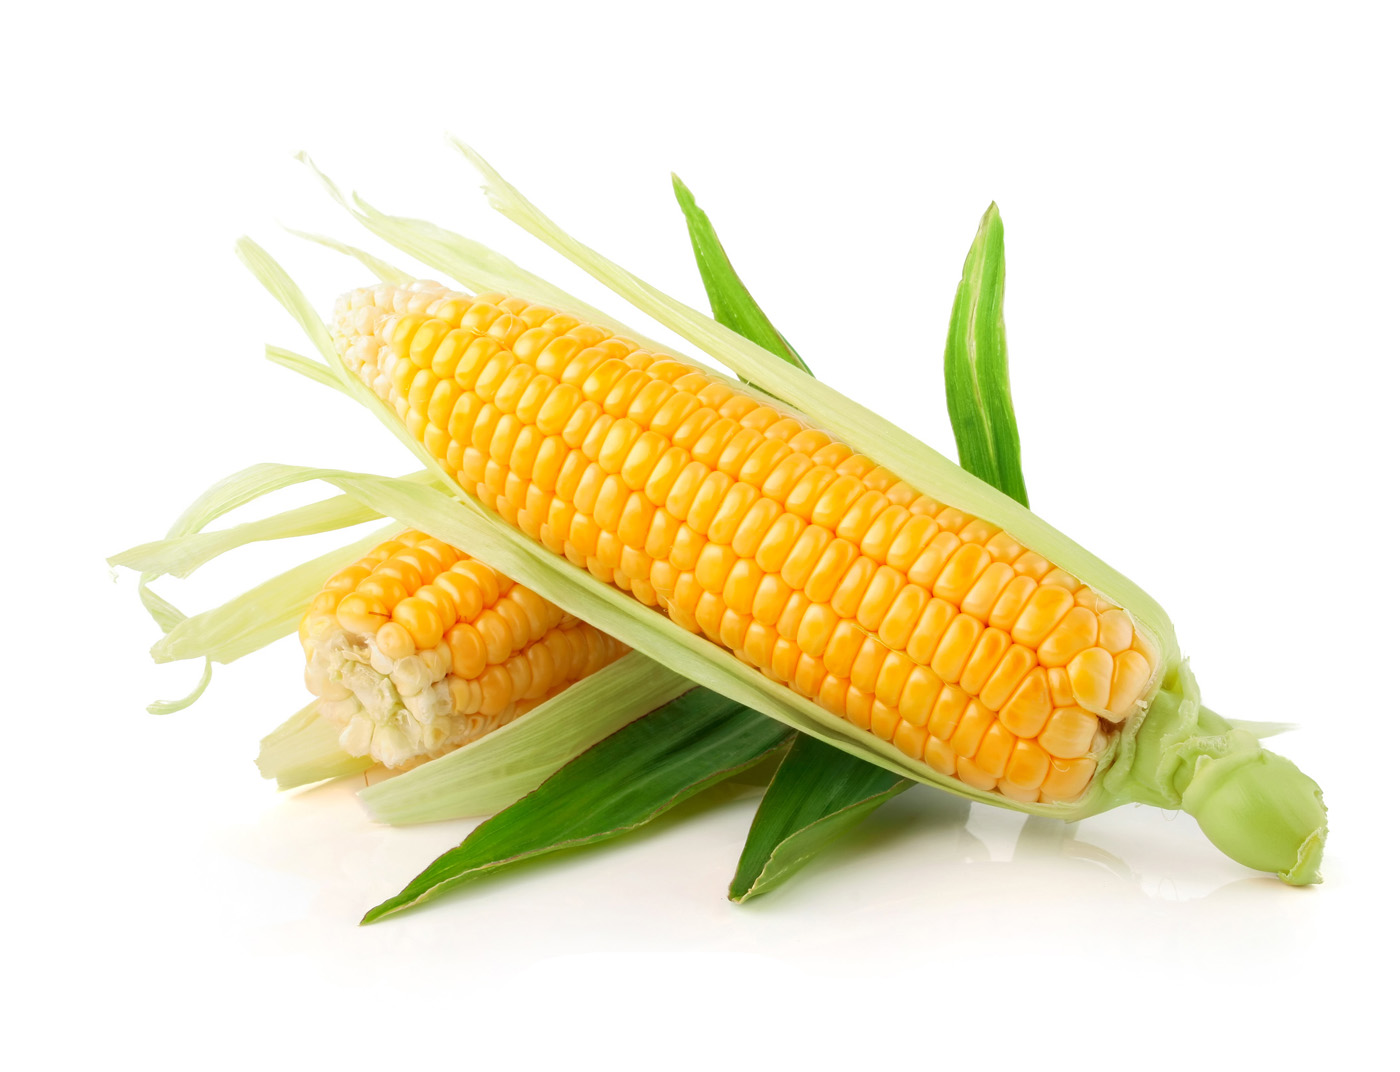 Health Benefits Of Corn